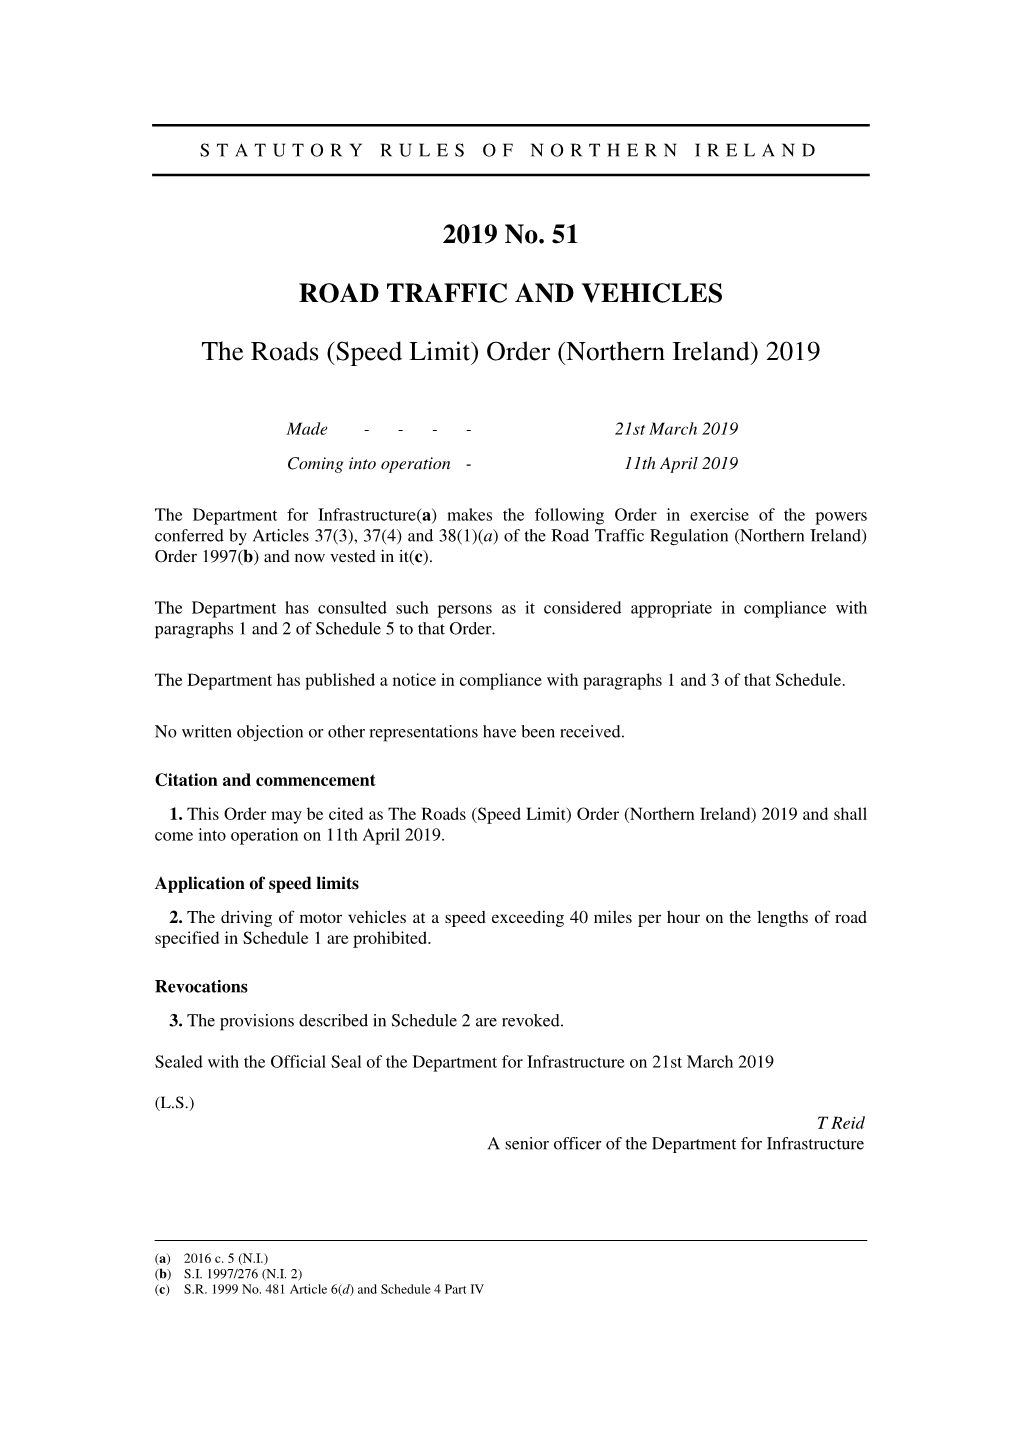 The Roads (Speed Limit) Order (Northern Ireland) 2019